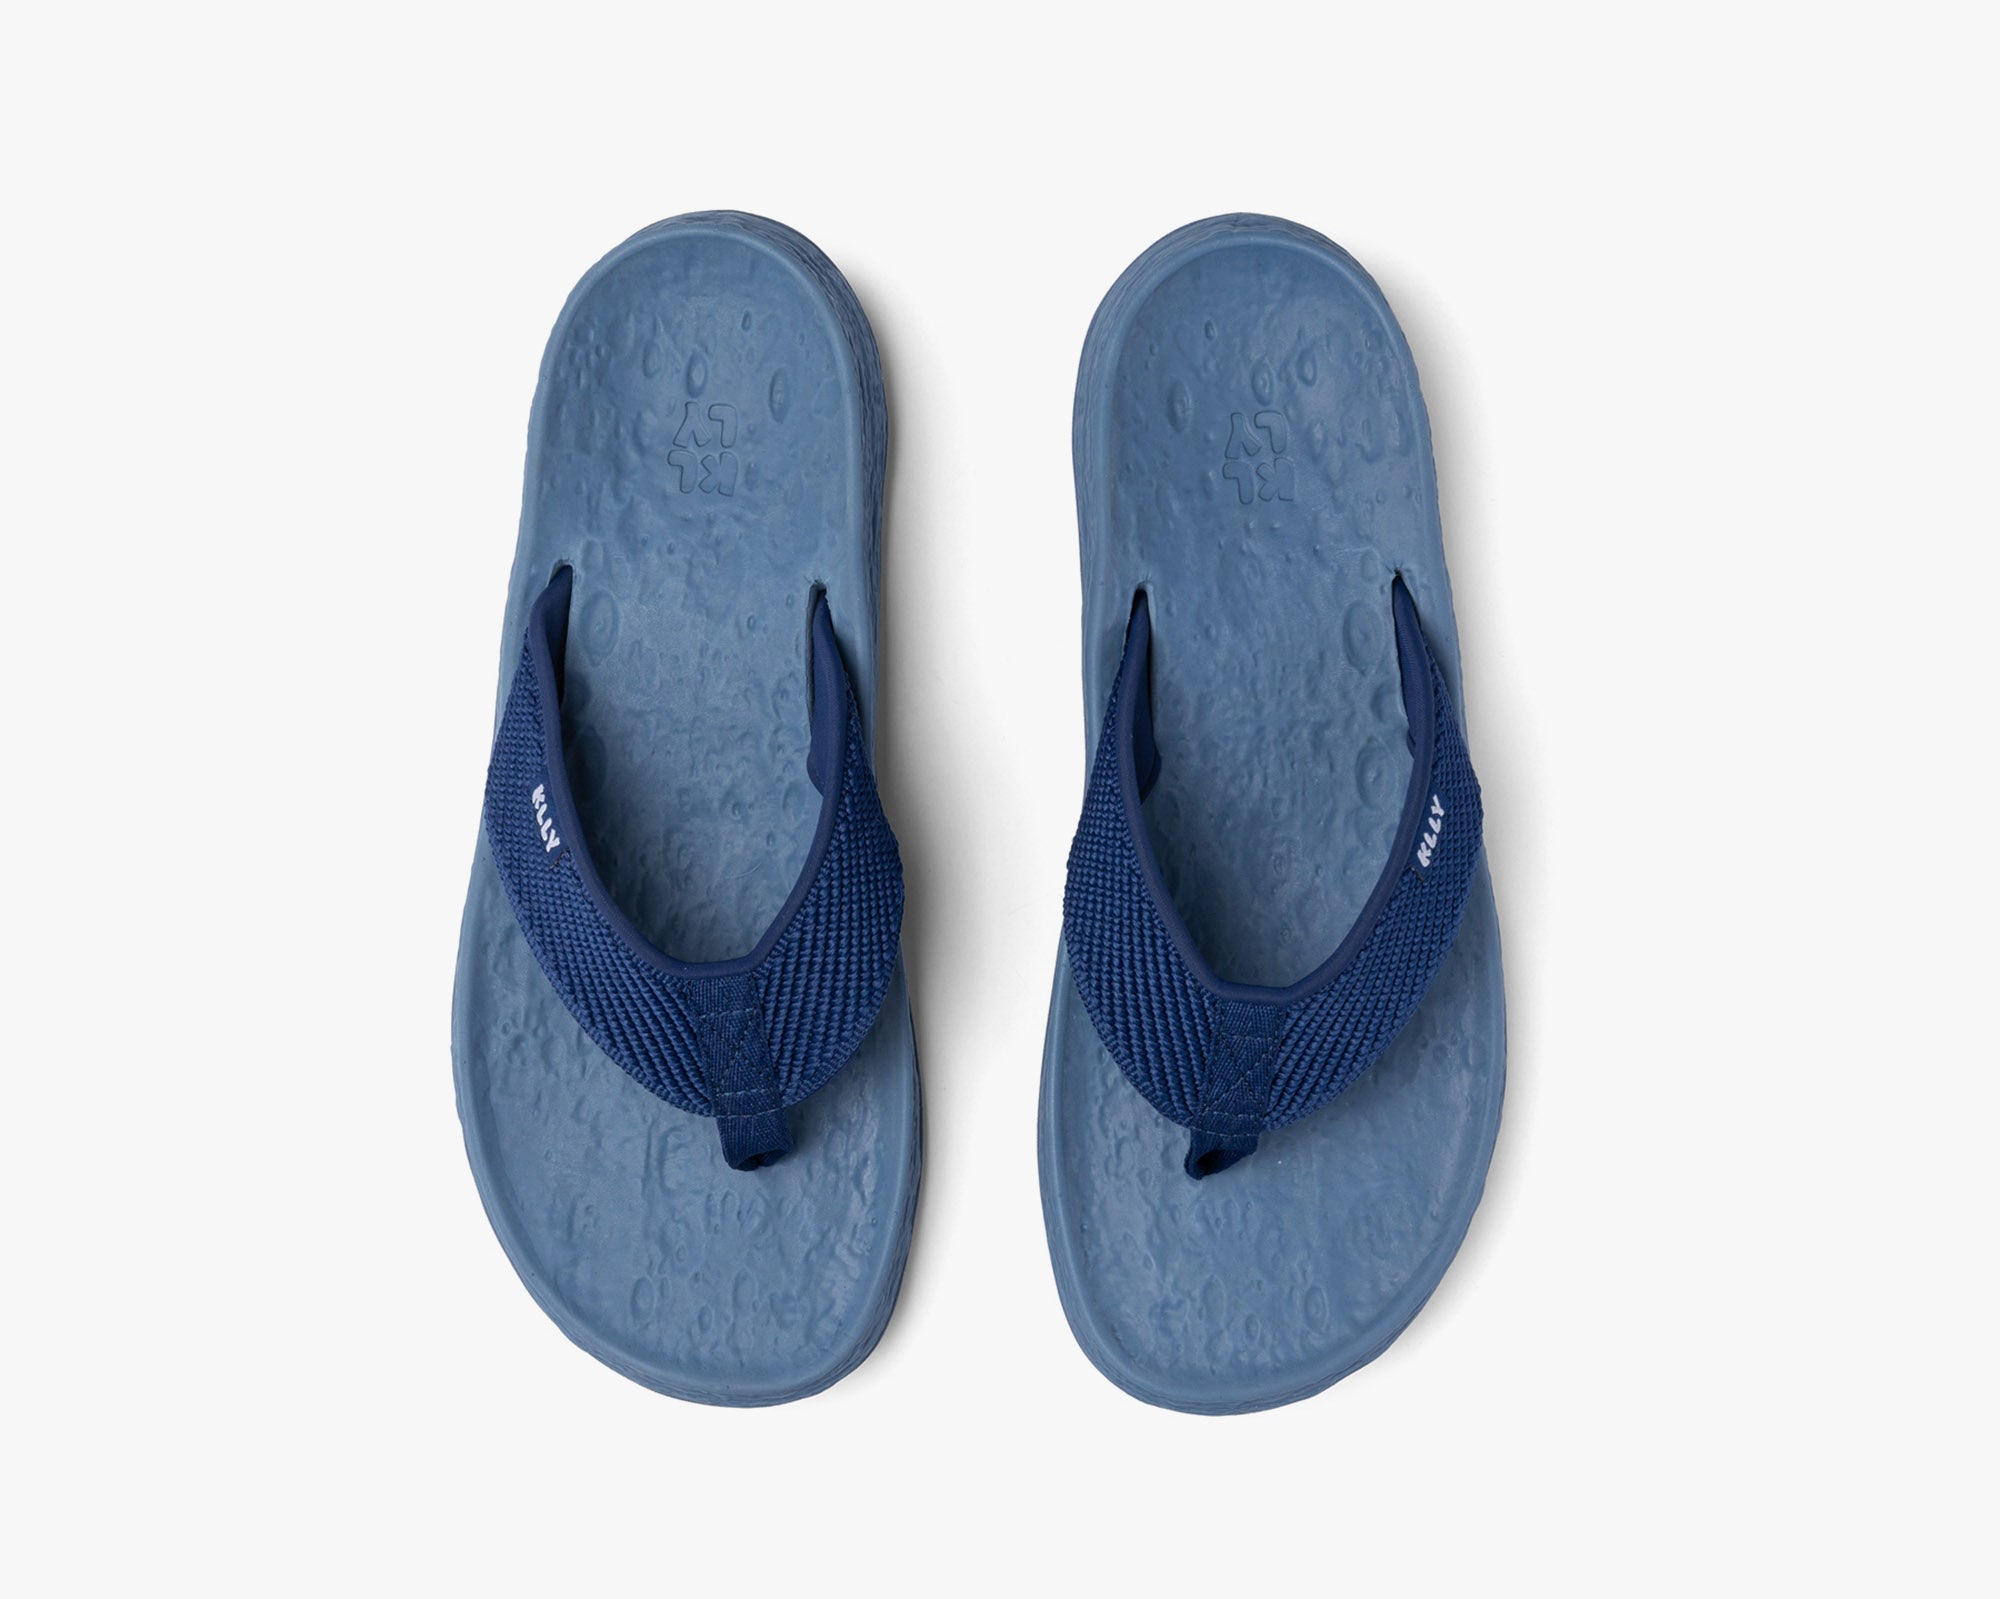 Men’s beach sandals - klly sandals blue moon?